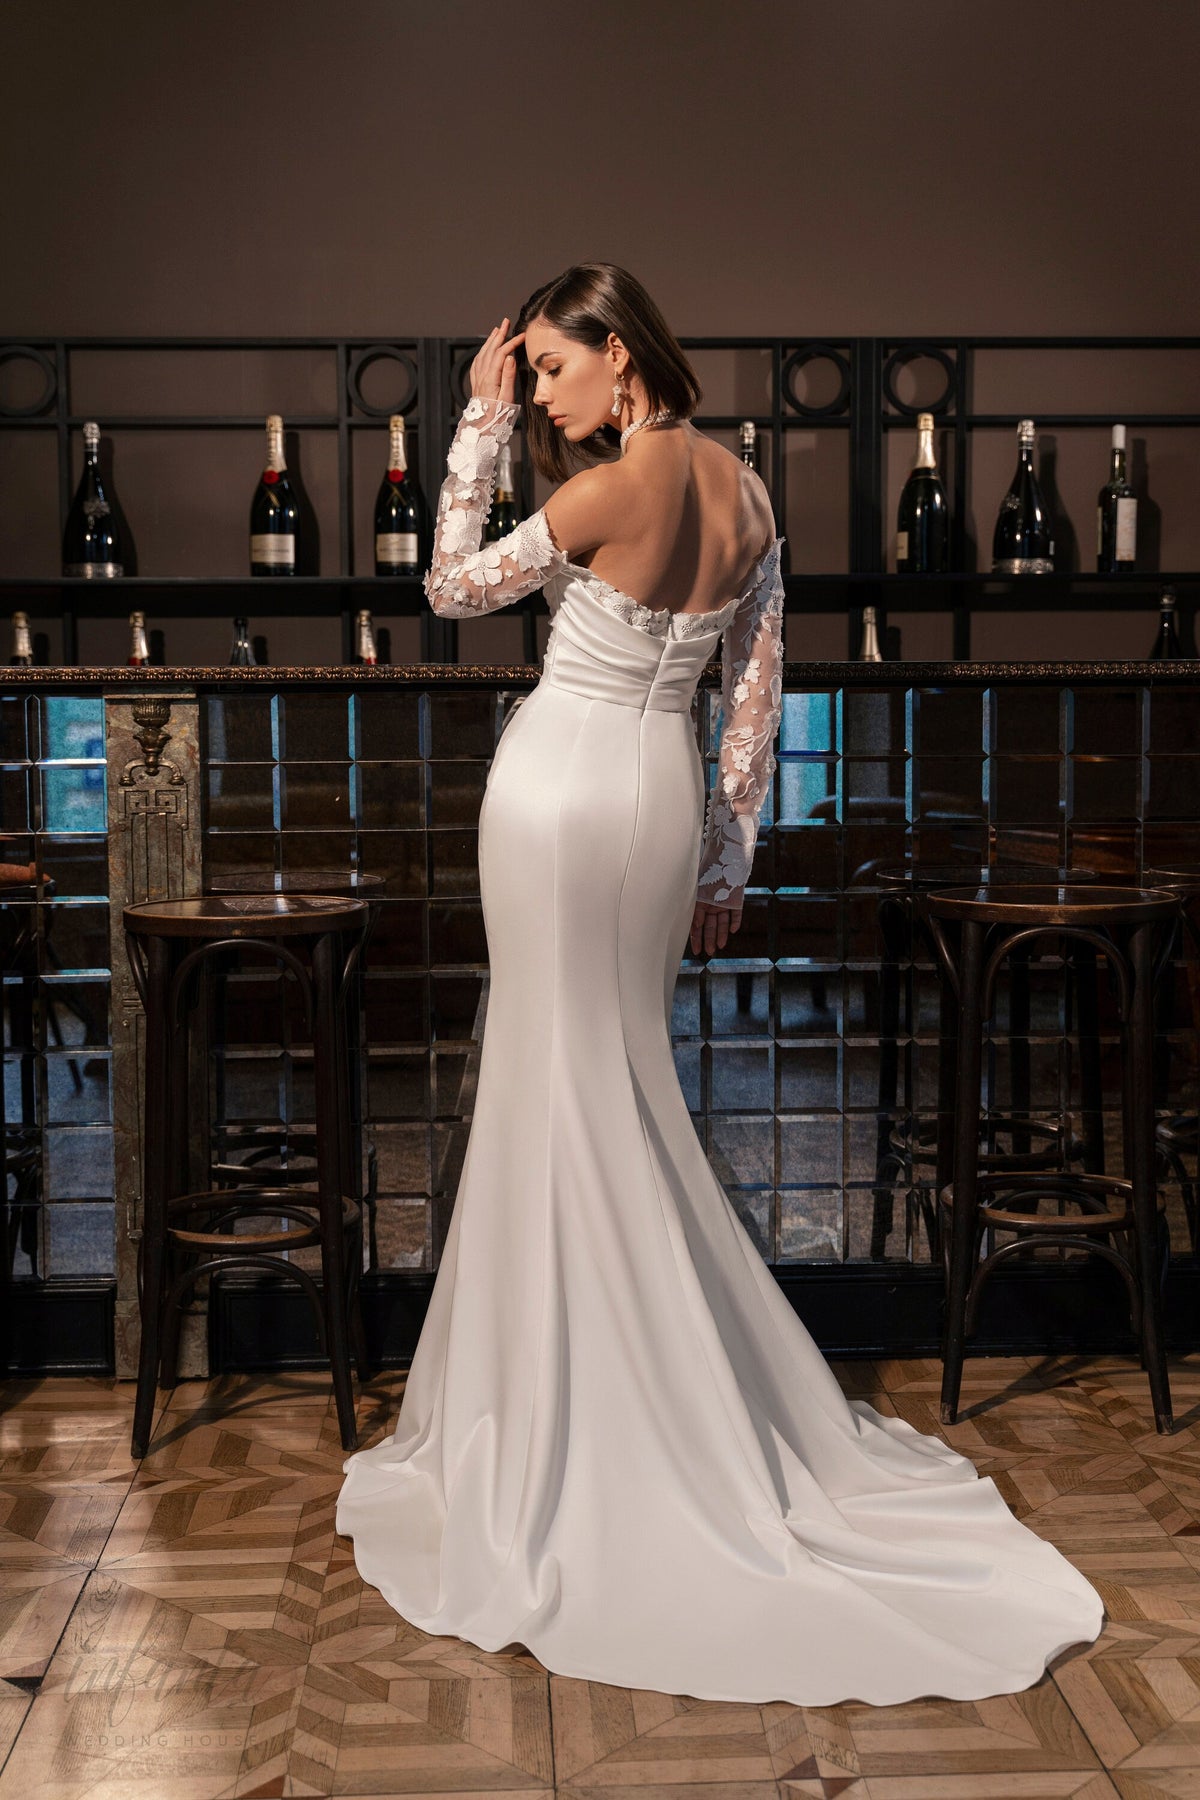 Unique Floral Lace Sleeves Strapless Off the Shoulder Wedding Dress Bridal Gown Gathered Waist Detachable Train Minimalist Design